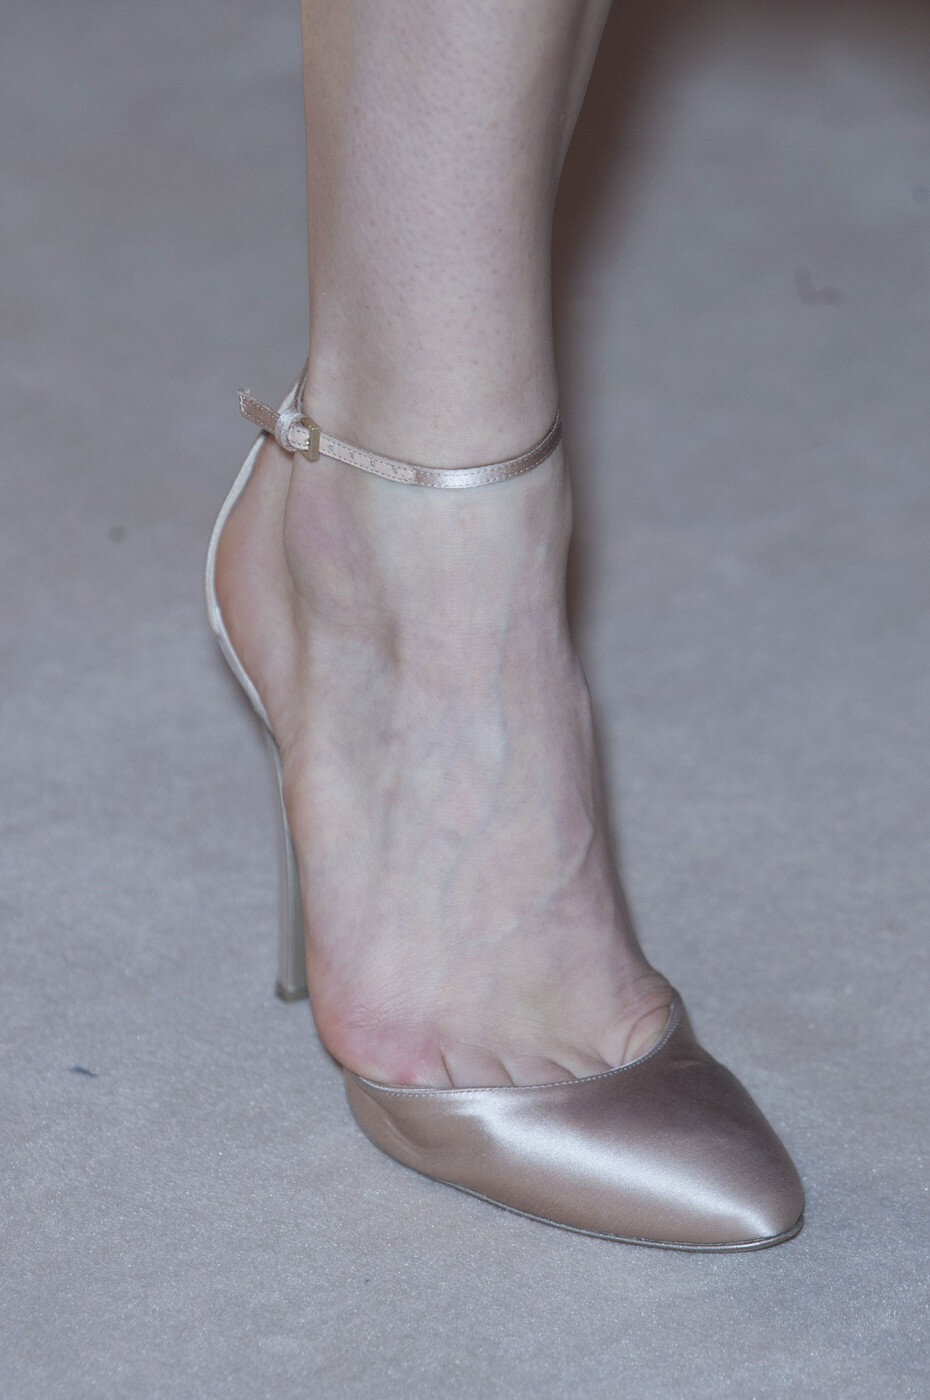 Armani Privé Ankle-Strap D'Orsay Pumps in Nude Silk.jpg